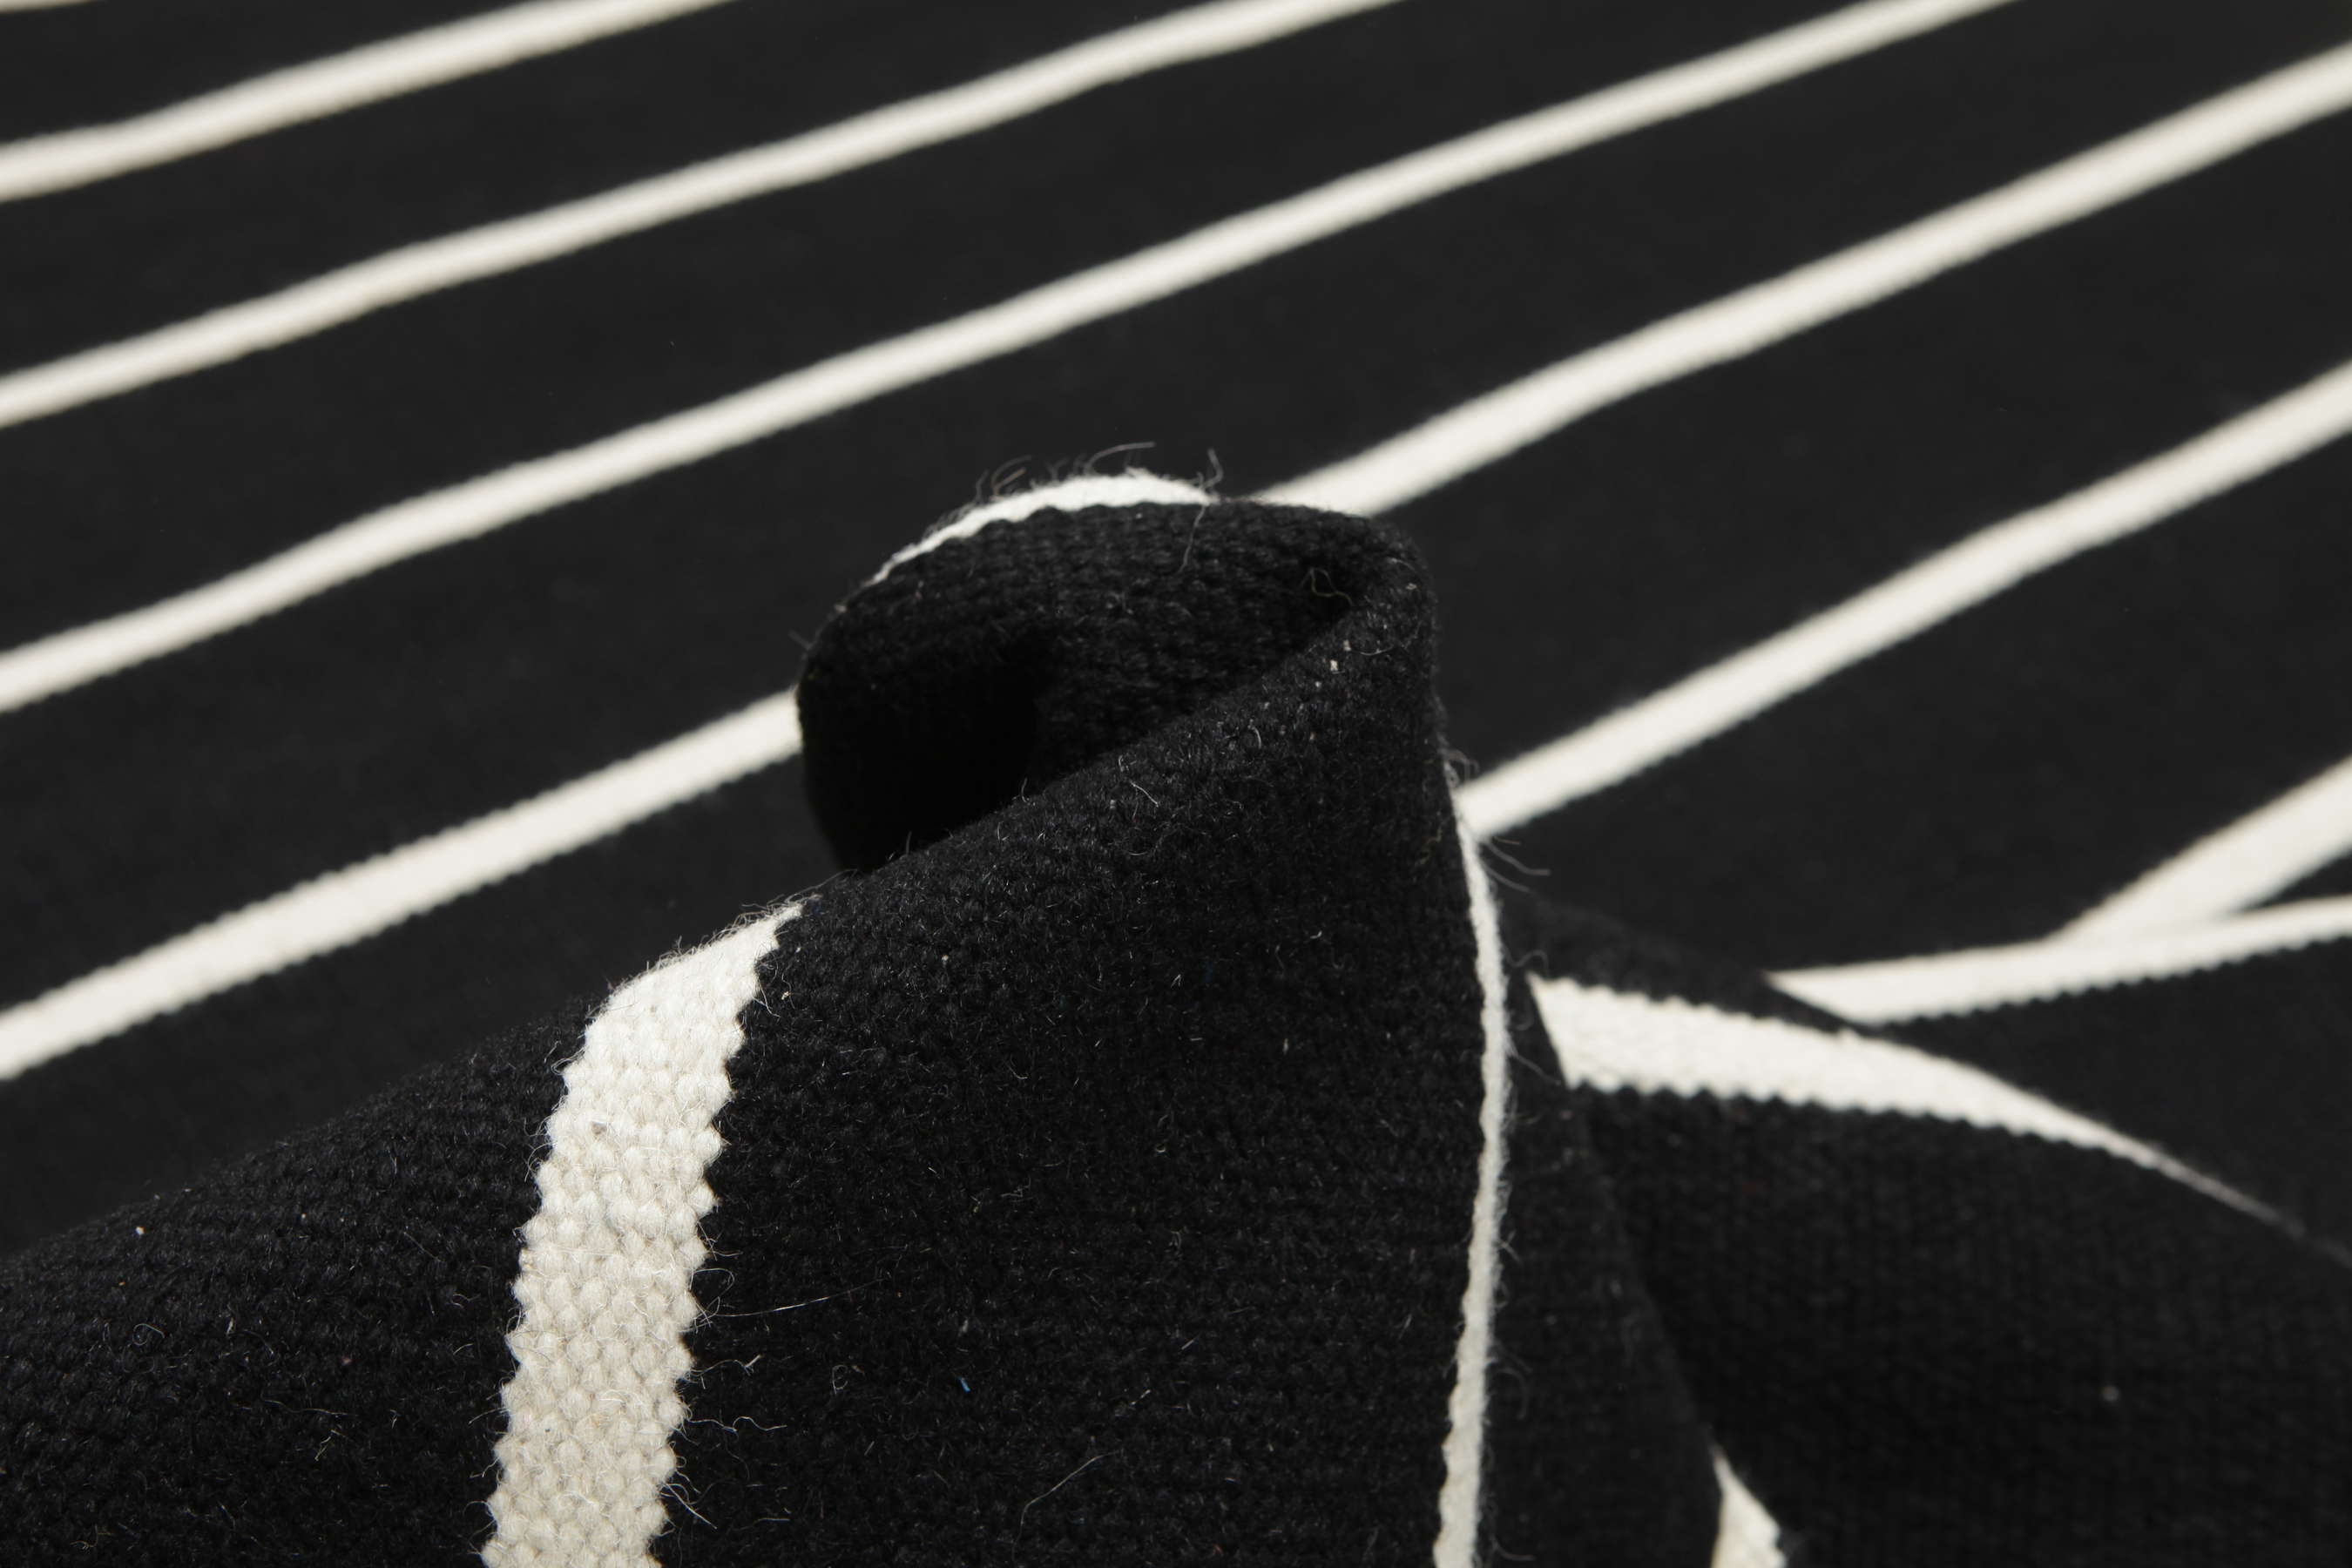 
    Dhurrie Stripe - Black / White - 220 x 320 cm
  